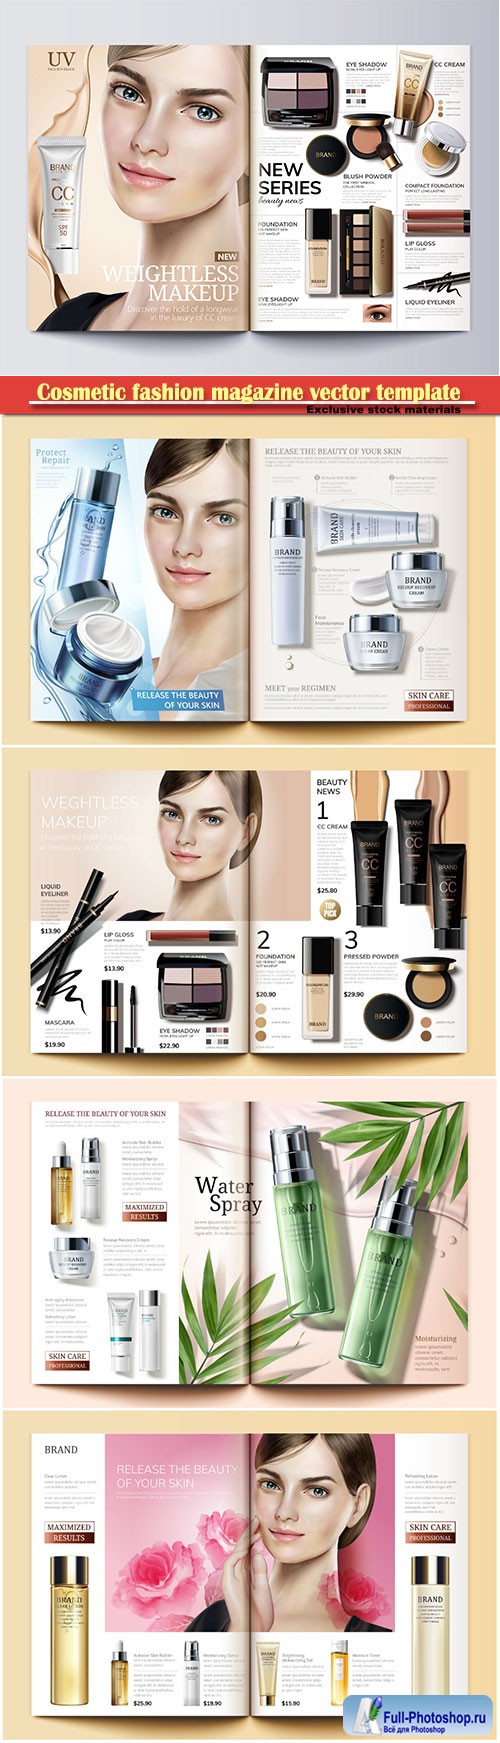 Cosmetic fashion magazine vector template #3